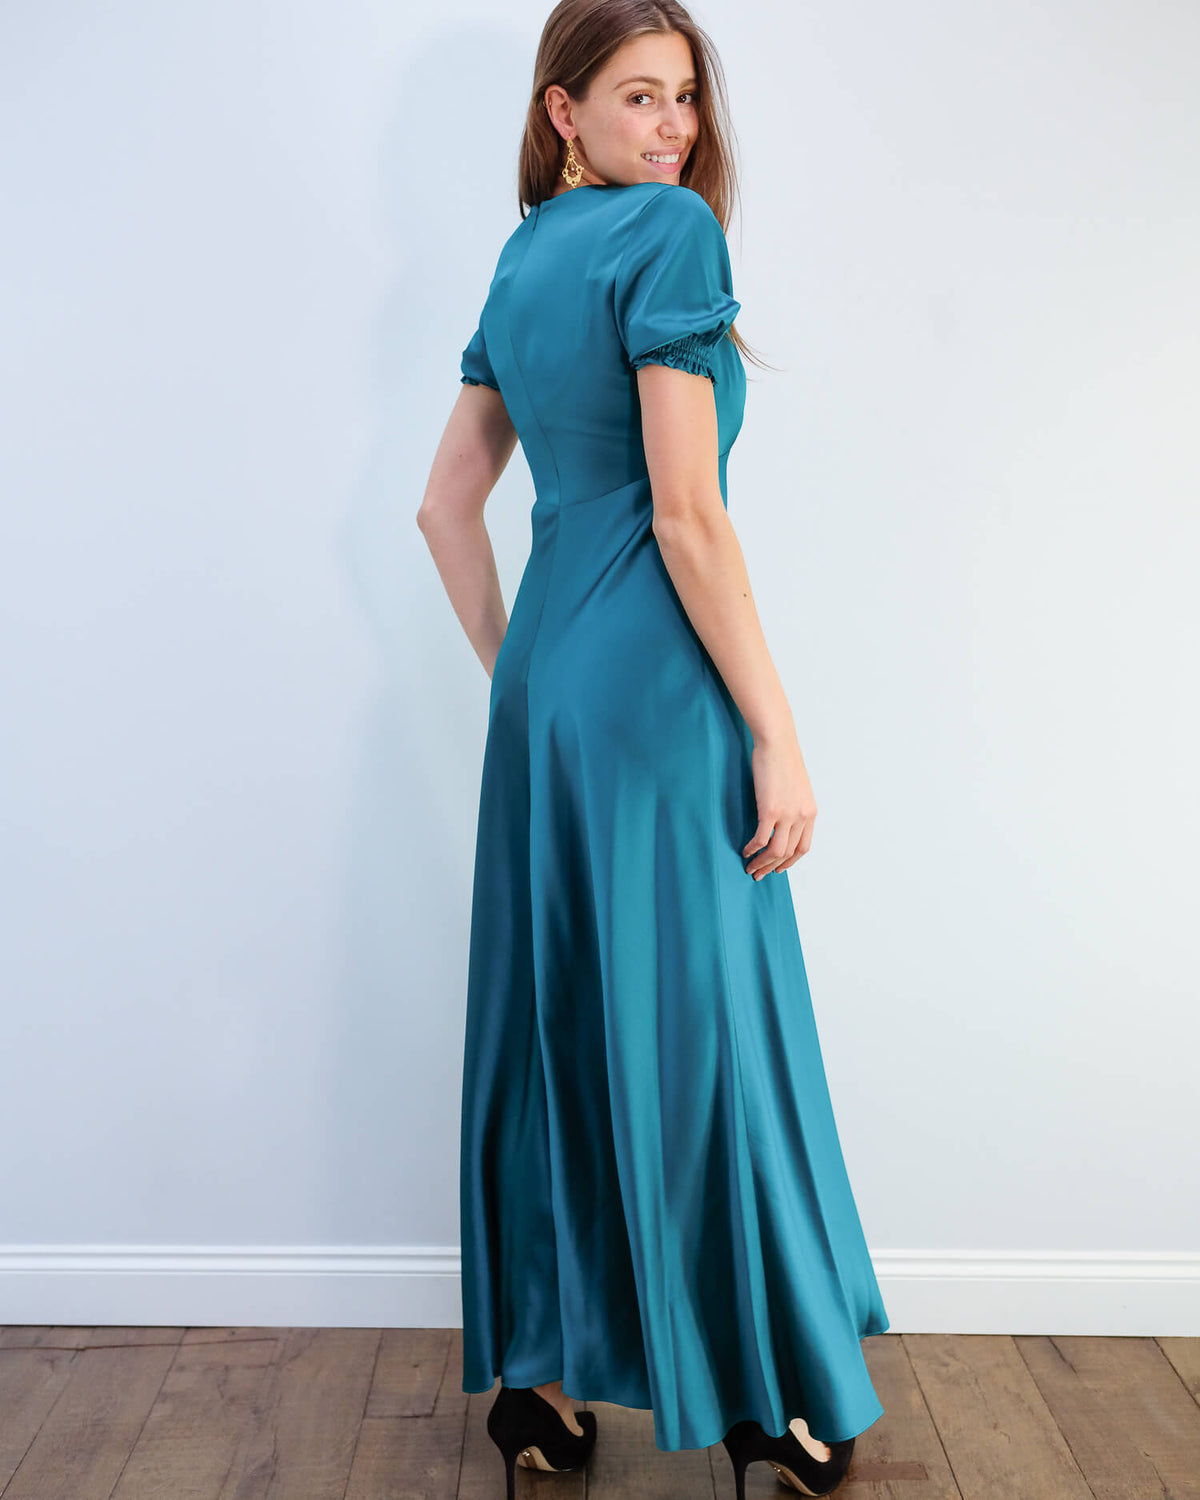 Diane von Furstenberg Zarita Black Lace Gown - Kate Middleton Dresses -  Kate's Closet